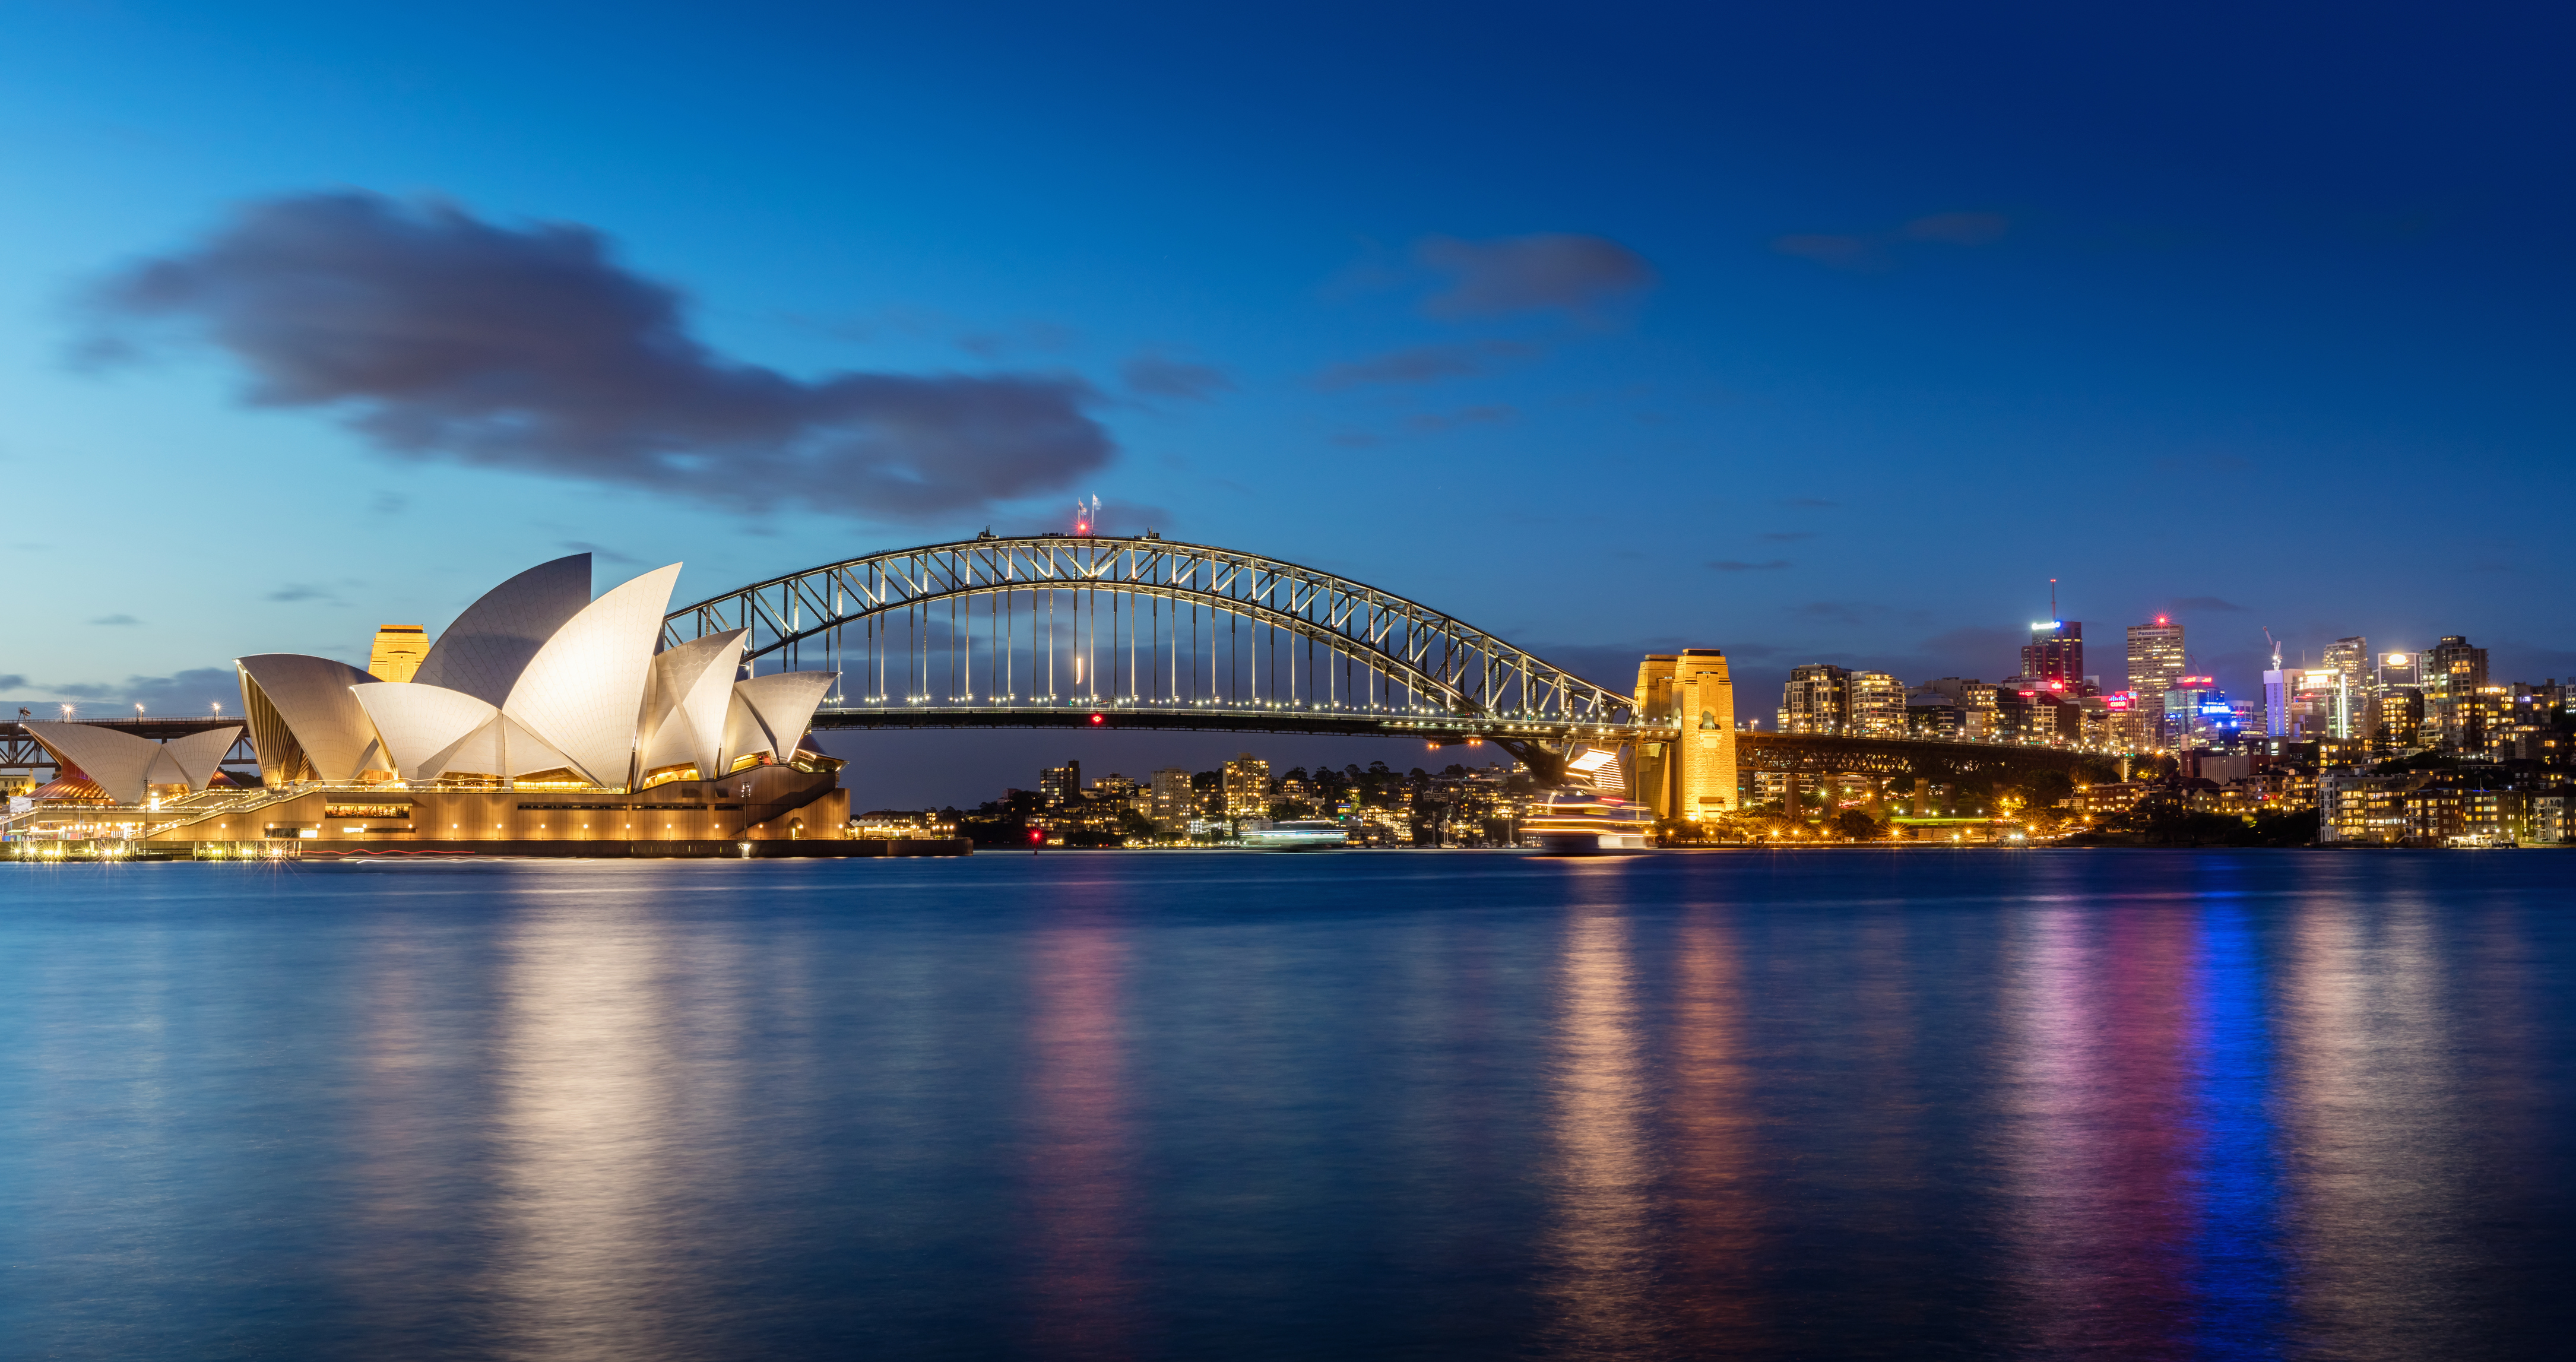 Panoramic view of the opera house and bridge in Sydney, Australia